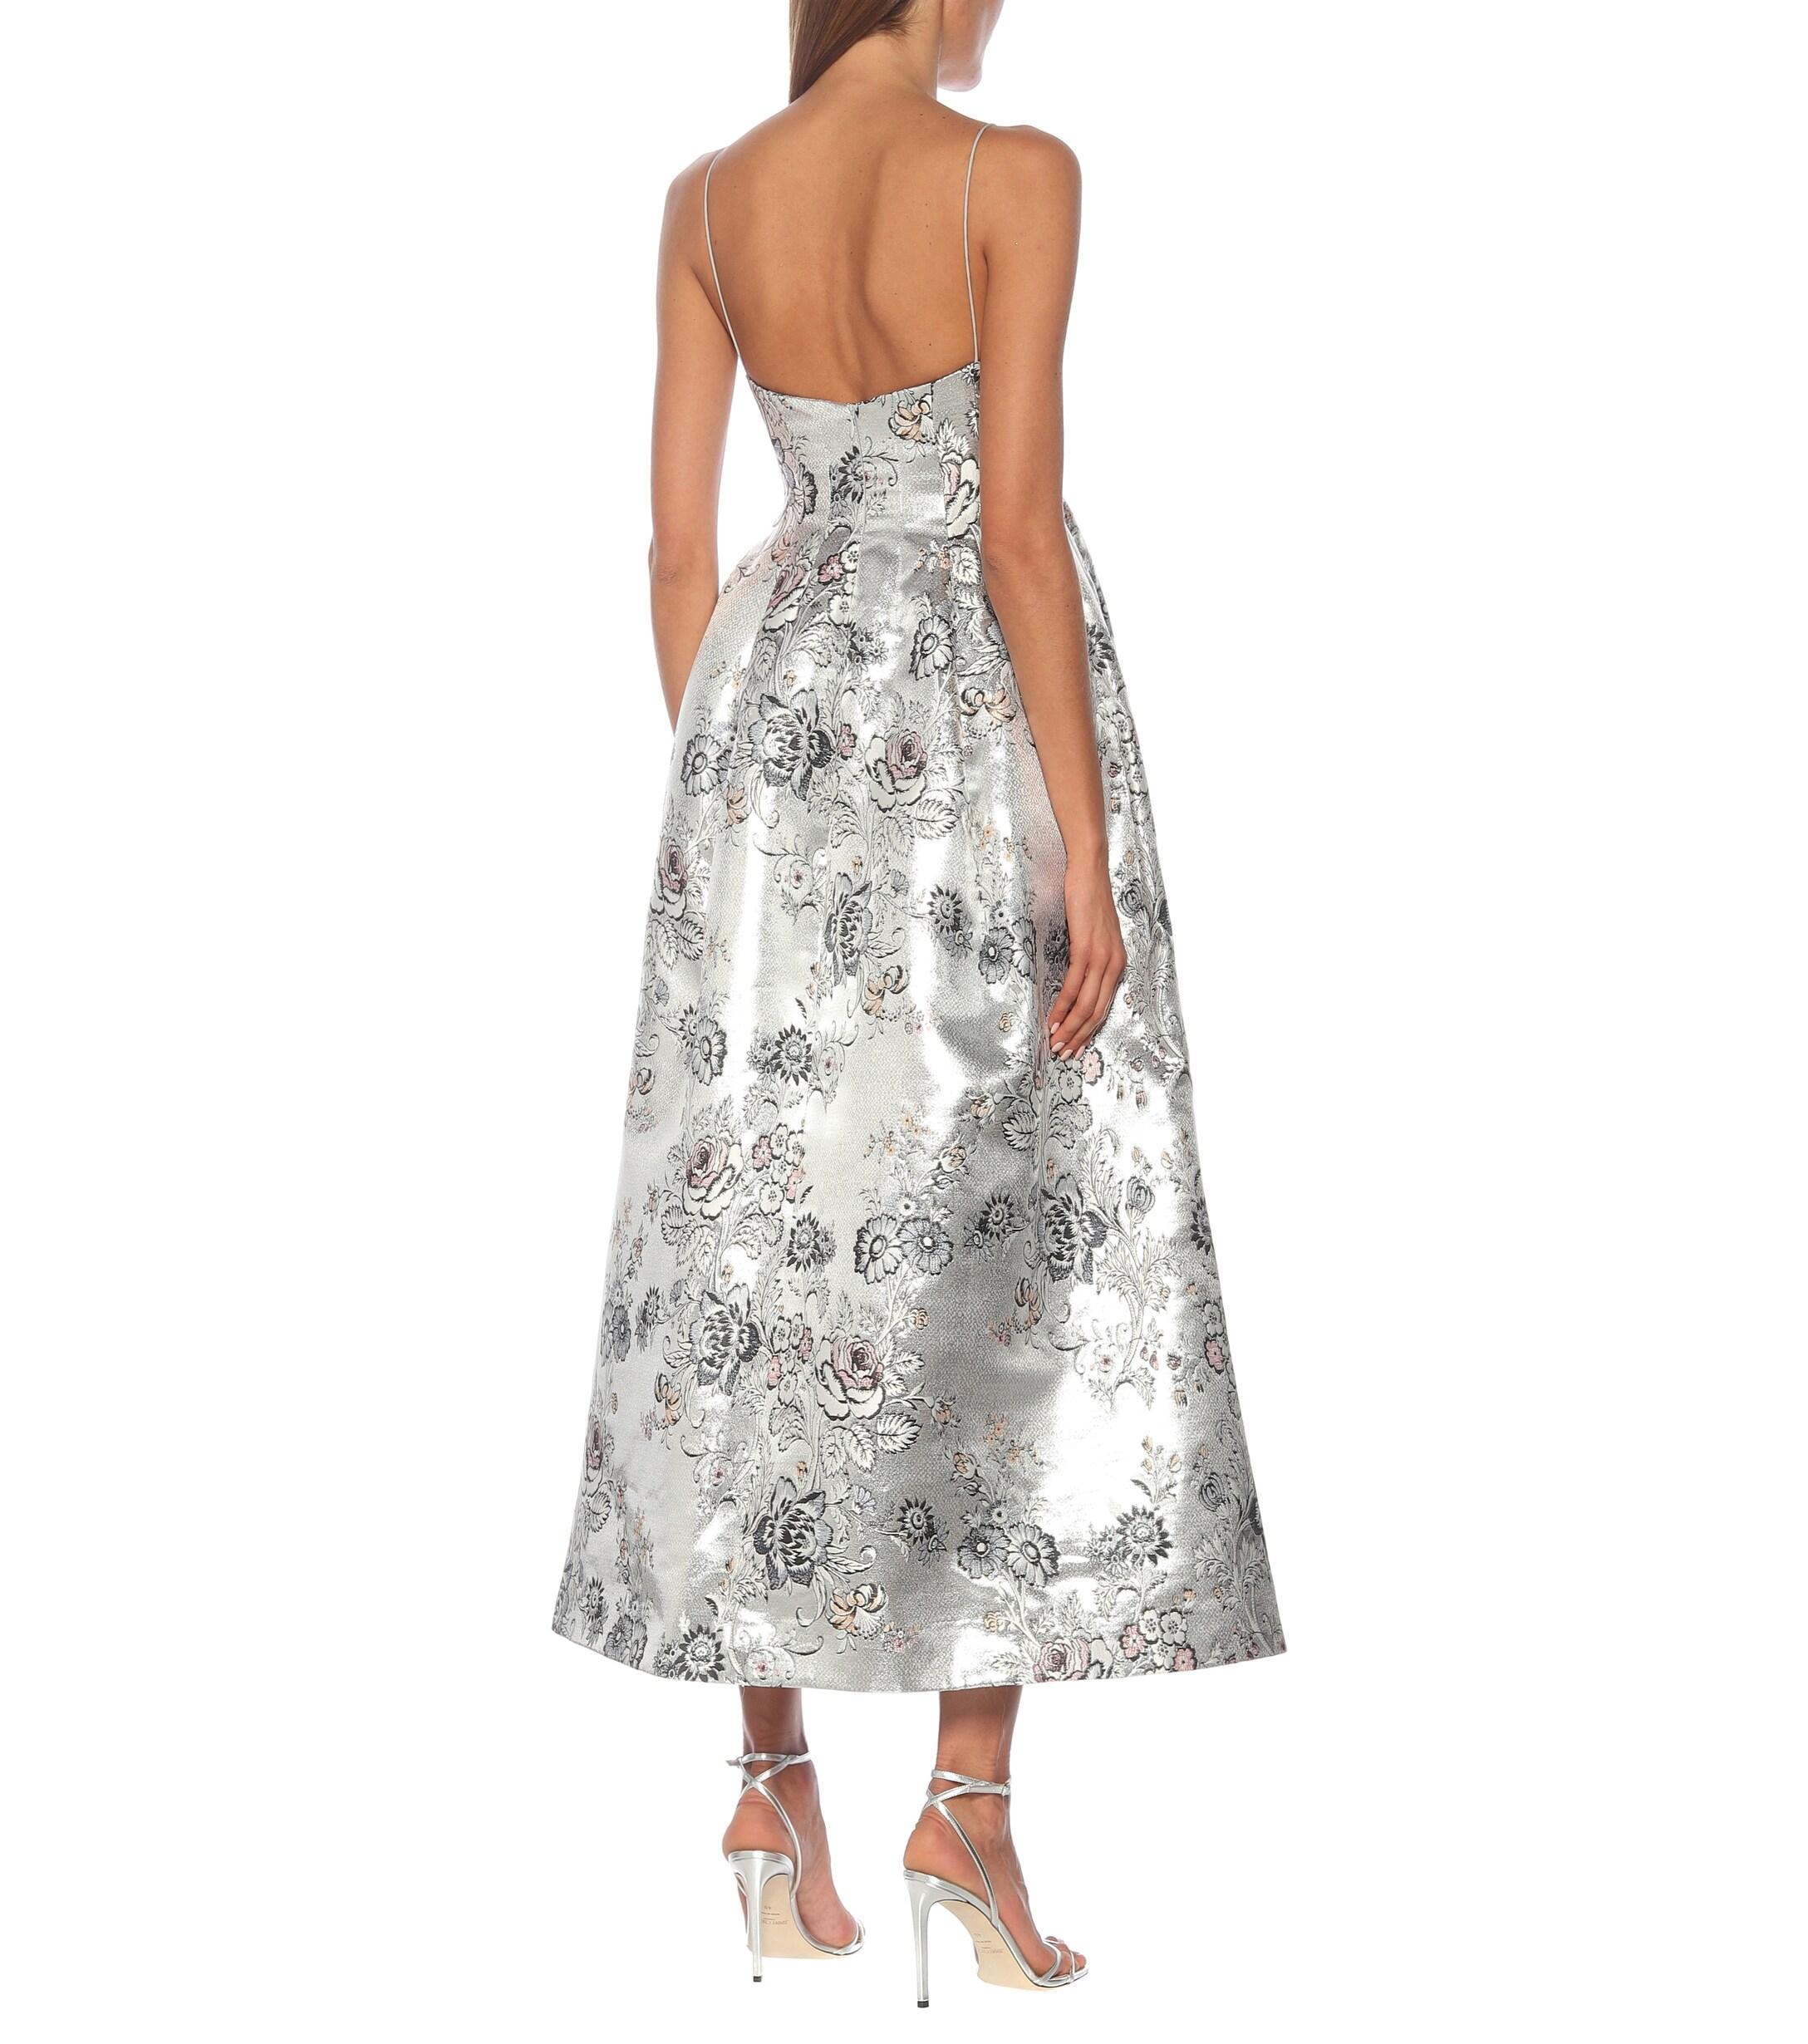 Erdem Adalyn Floral Jacquard Maxi Dress in Silver (Metallic) - Lyst